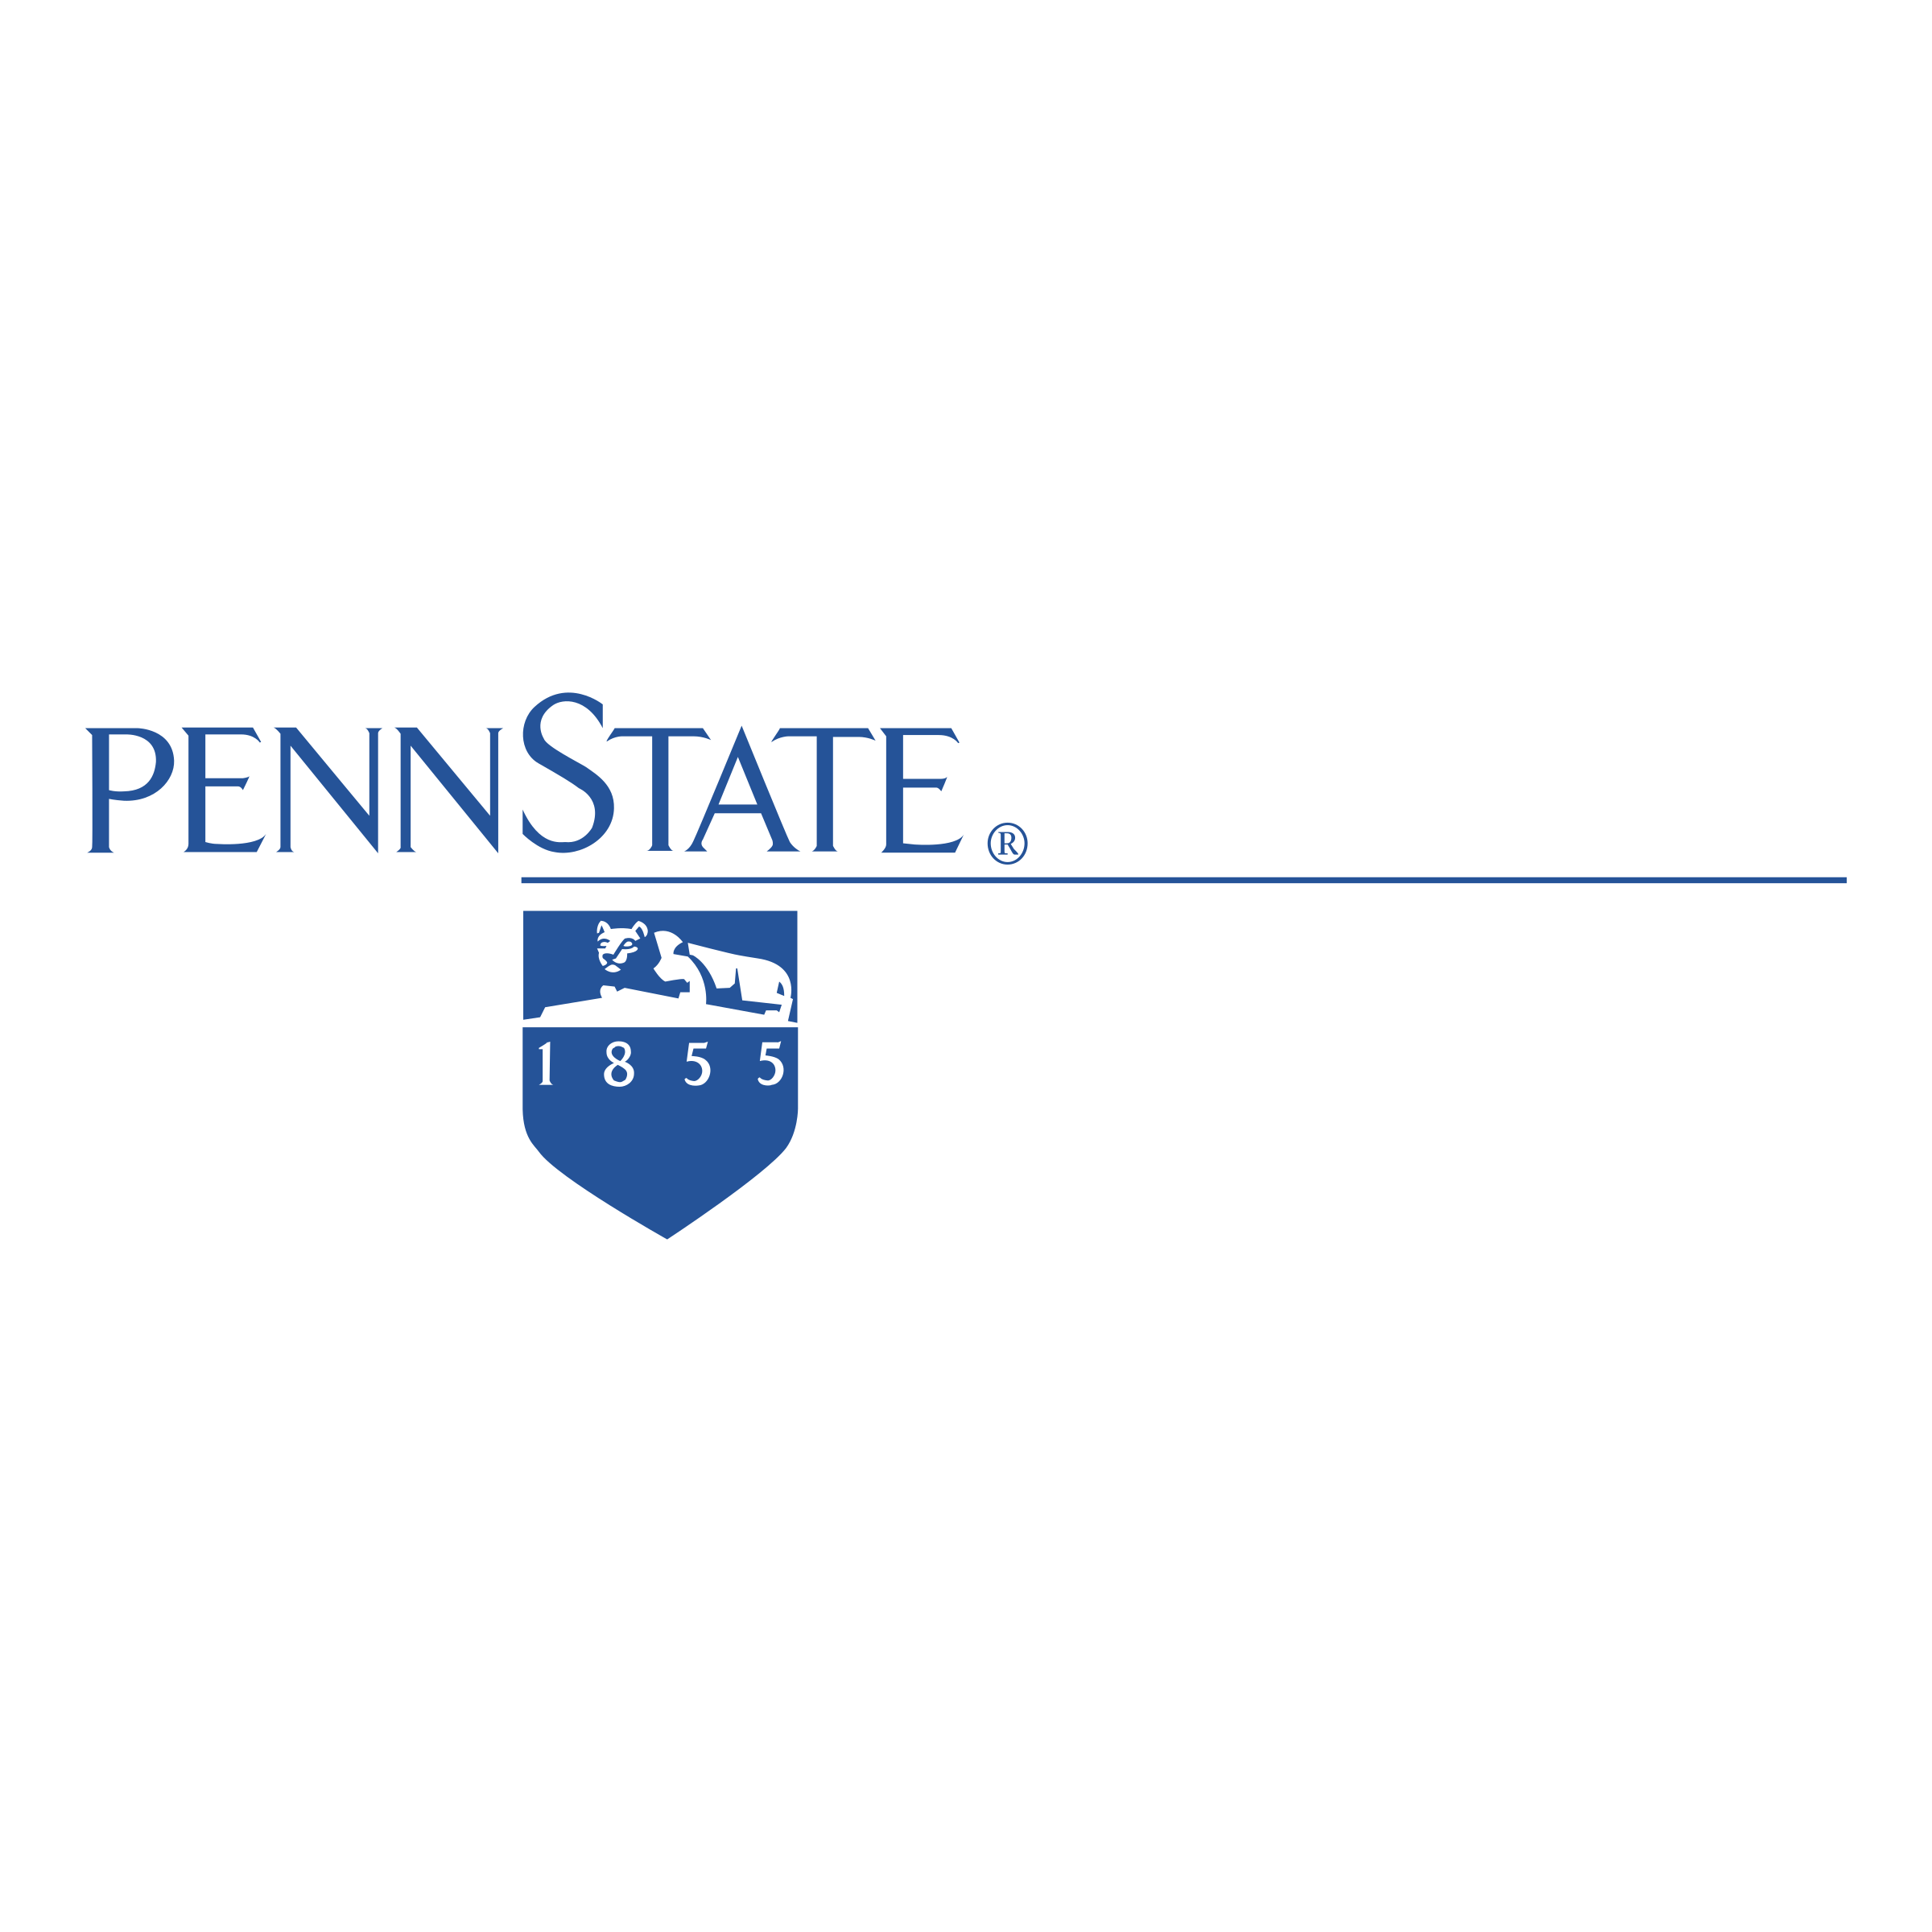 Penn State University Logo - Penn State University Logo PNG Transparent & SVG Vector - Freebie Supply